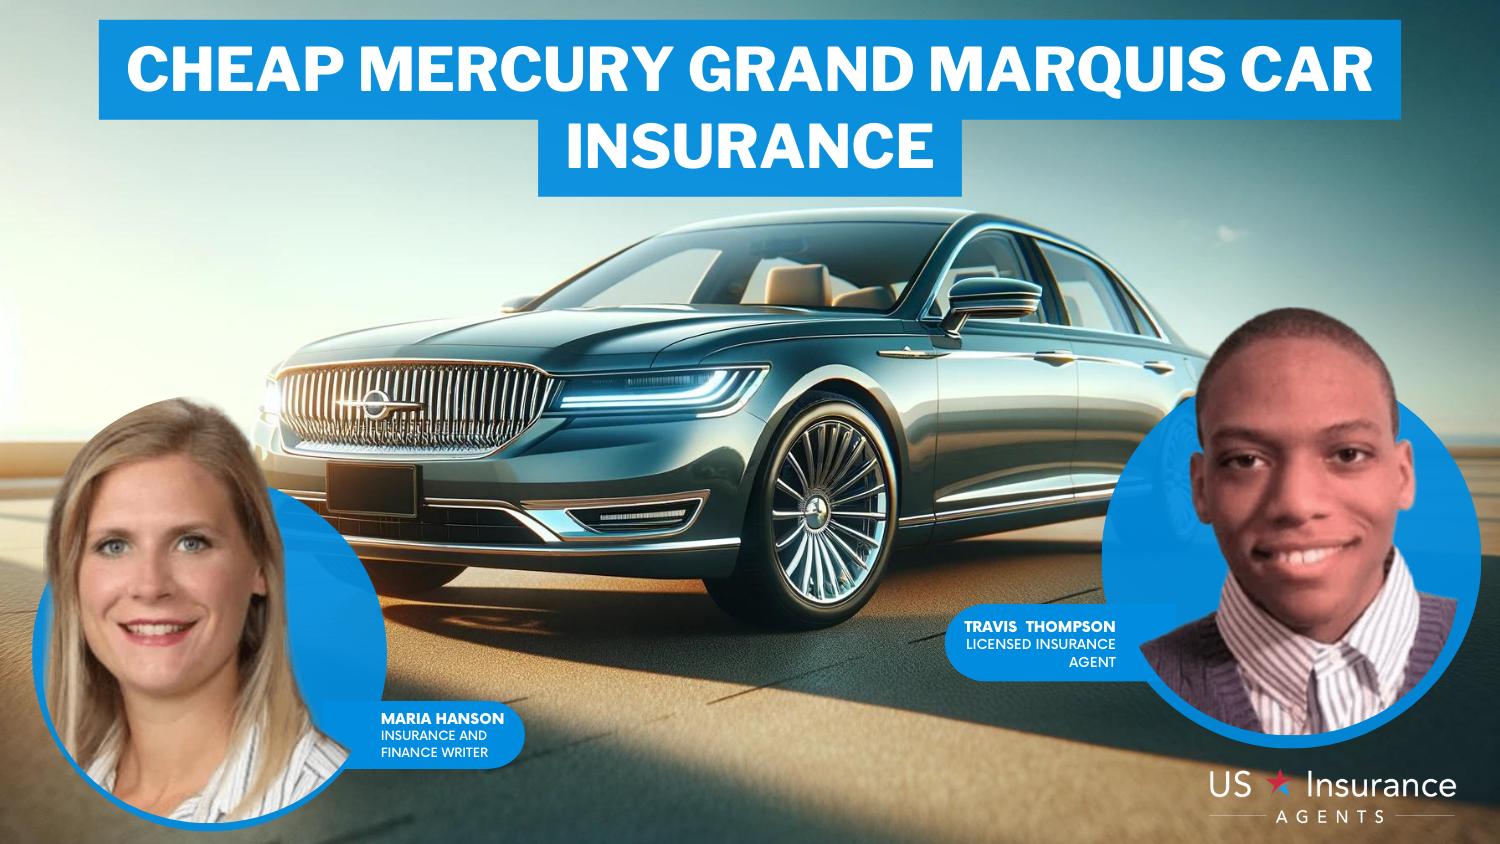 Cheap Mercury Grand Marquis Car Insurance: Progressive, State Farm, and The General